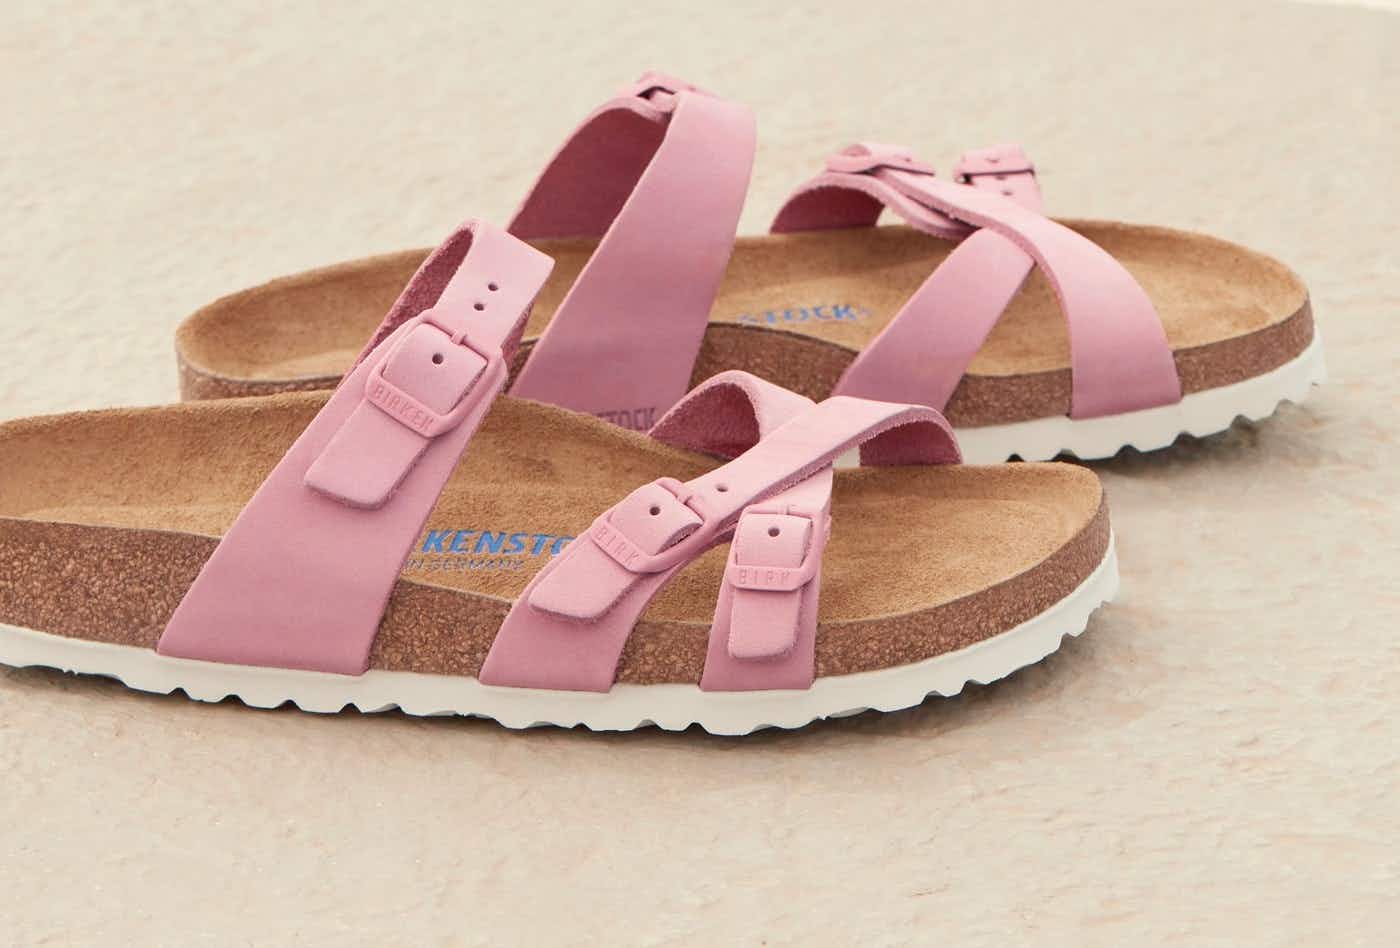 birkenstock black friday - zappos pink leather birkenstock sandals